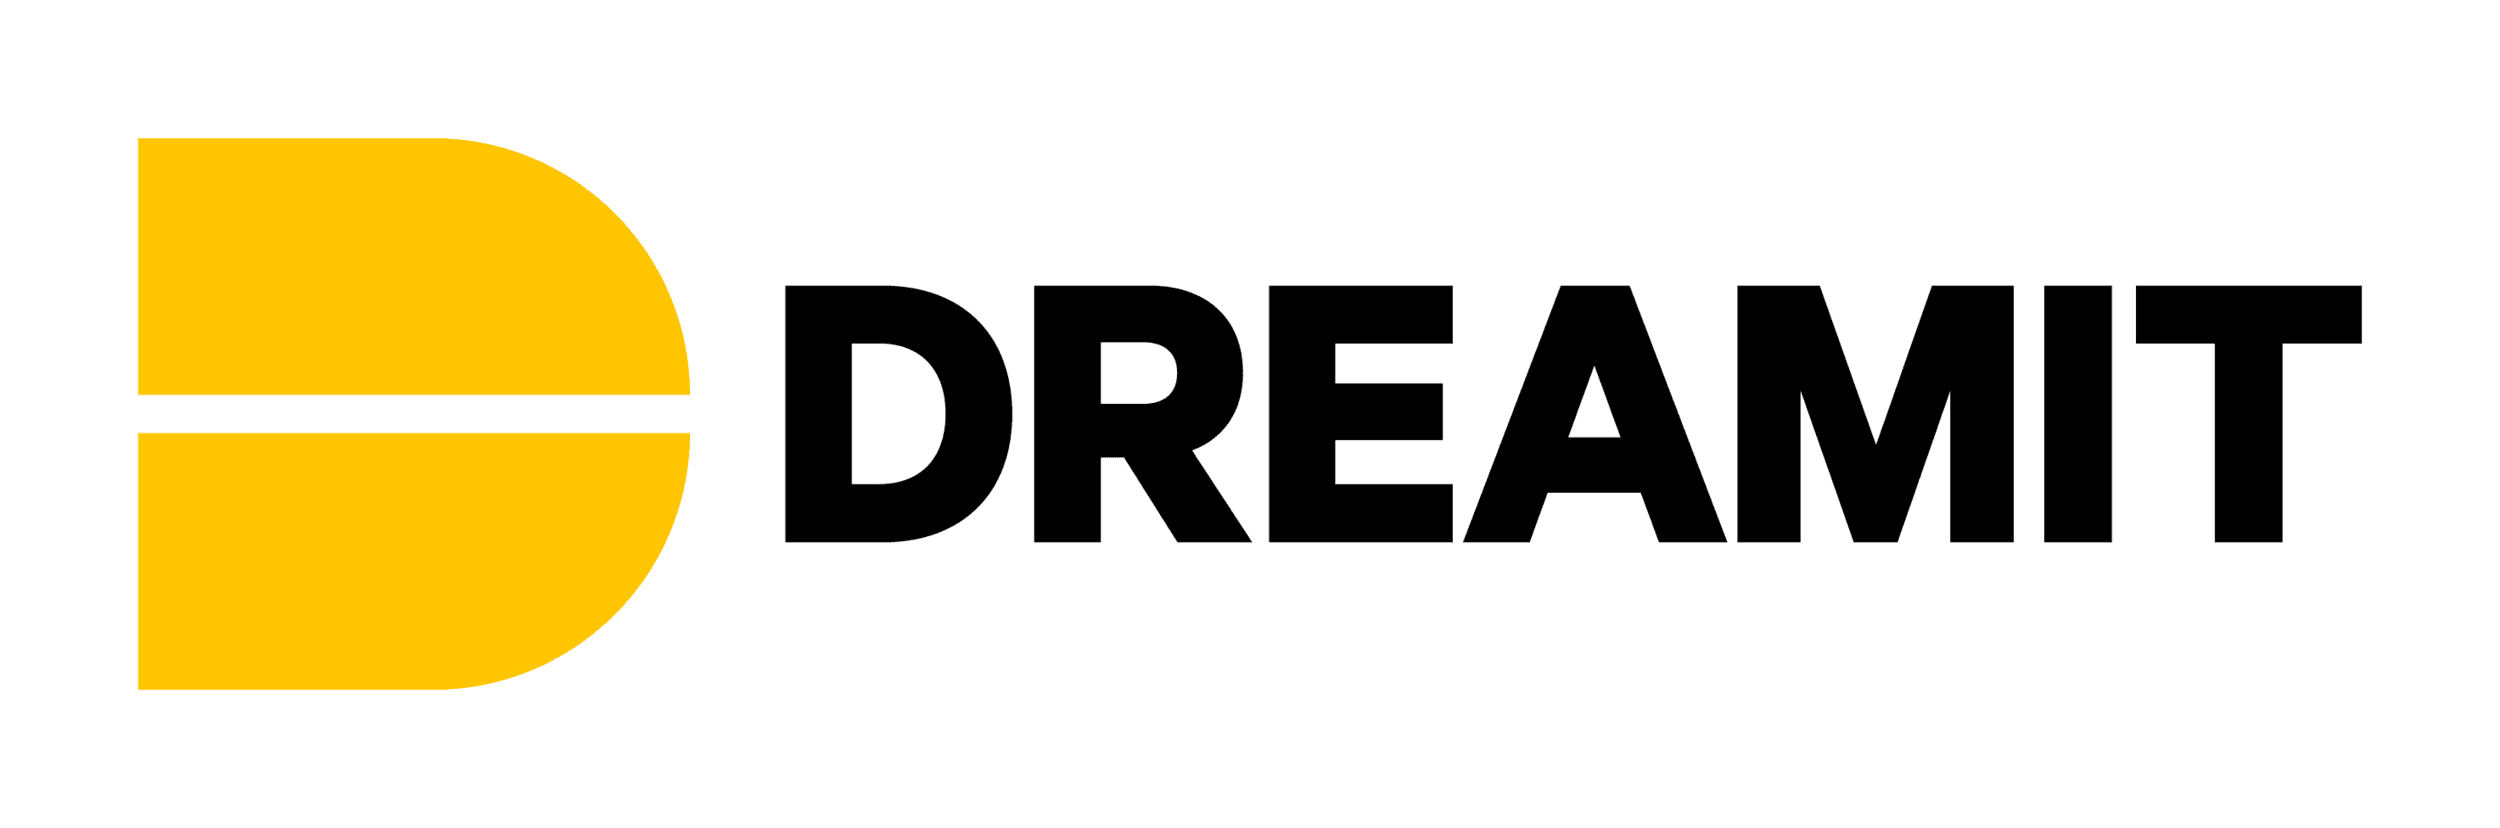 Dreamit HealthTech